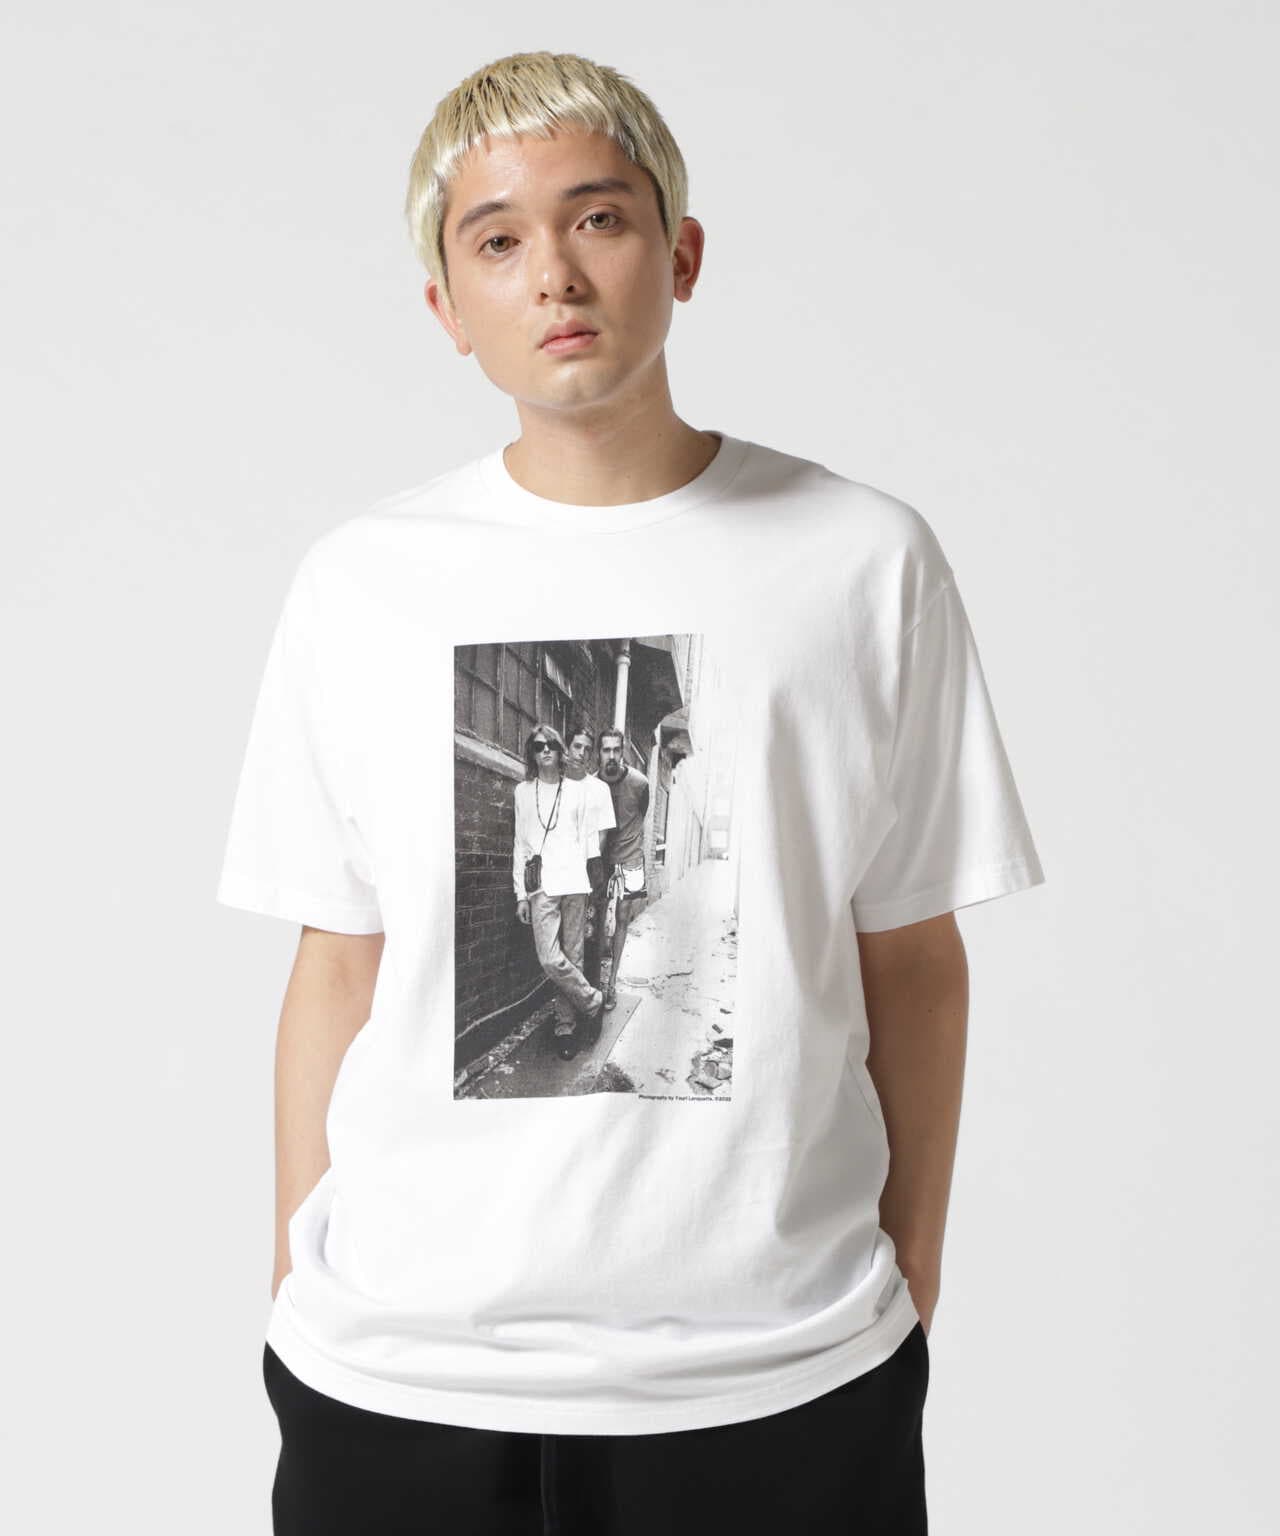 Nirvana プリント半袖Tシャツ オフホワイト サイズS